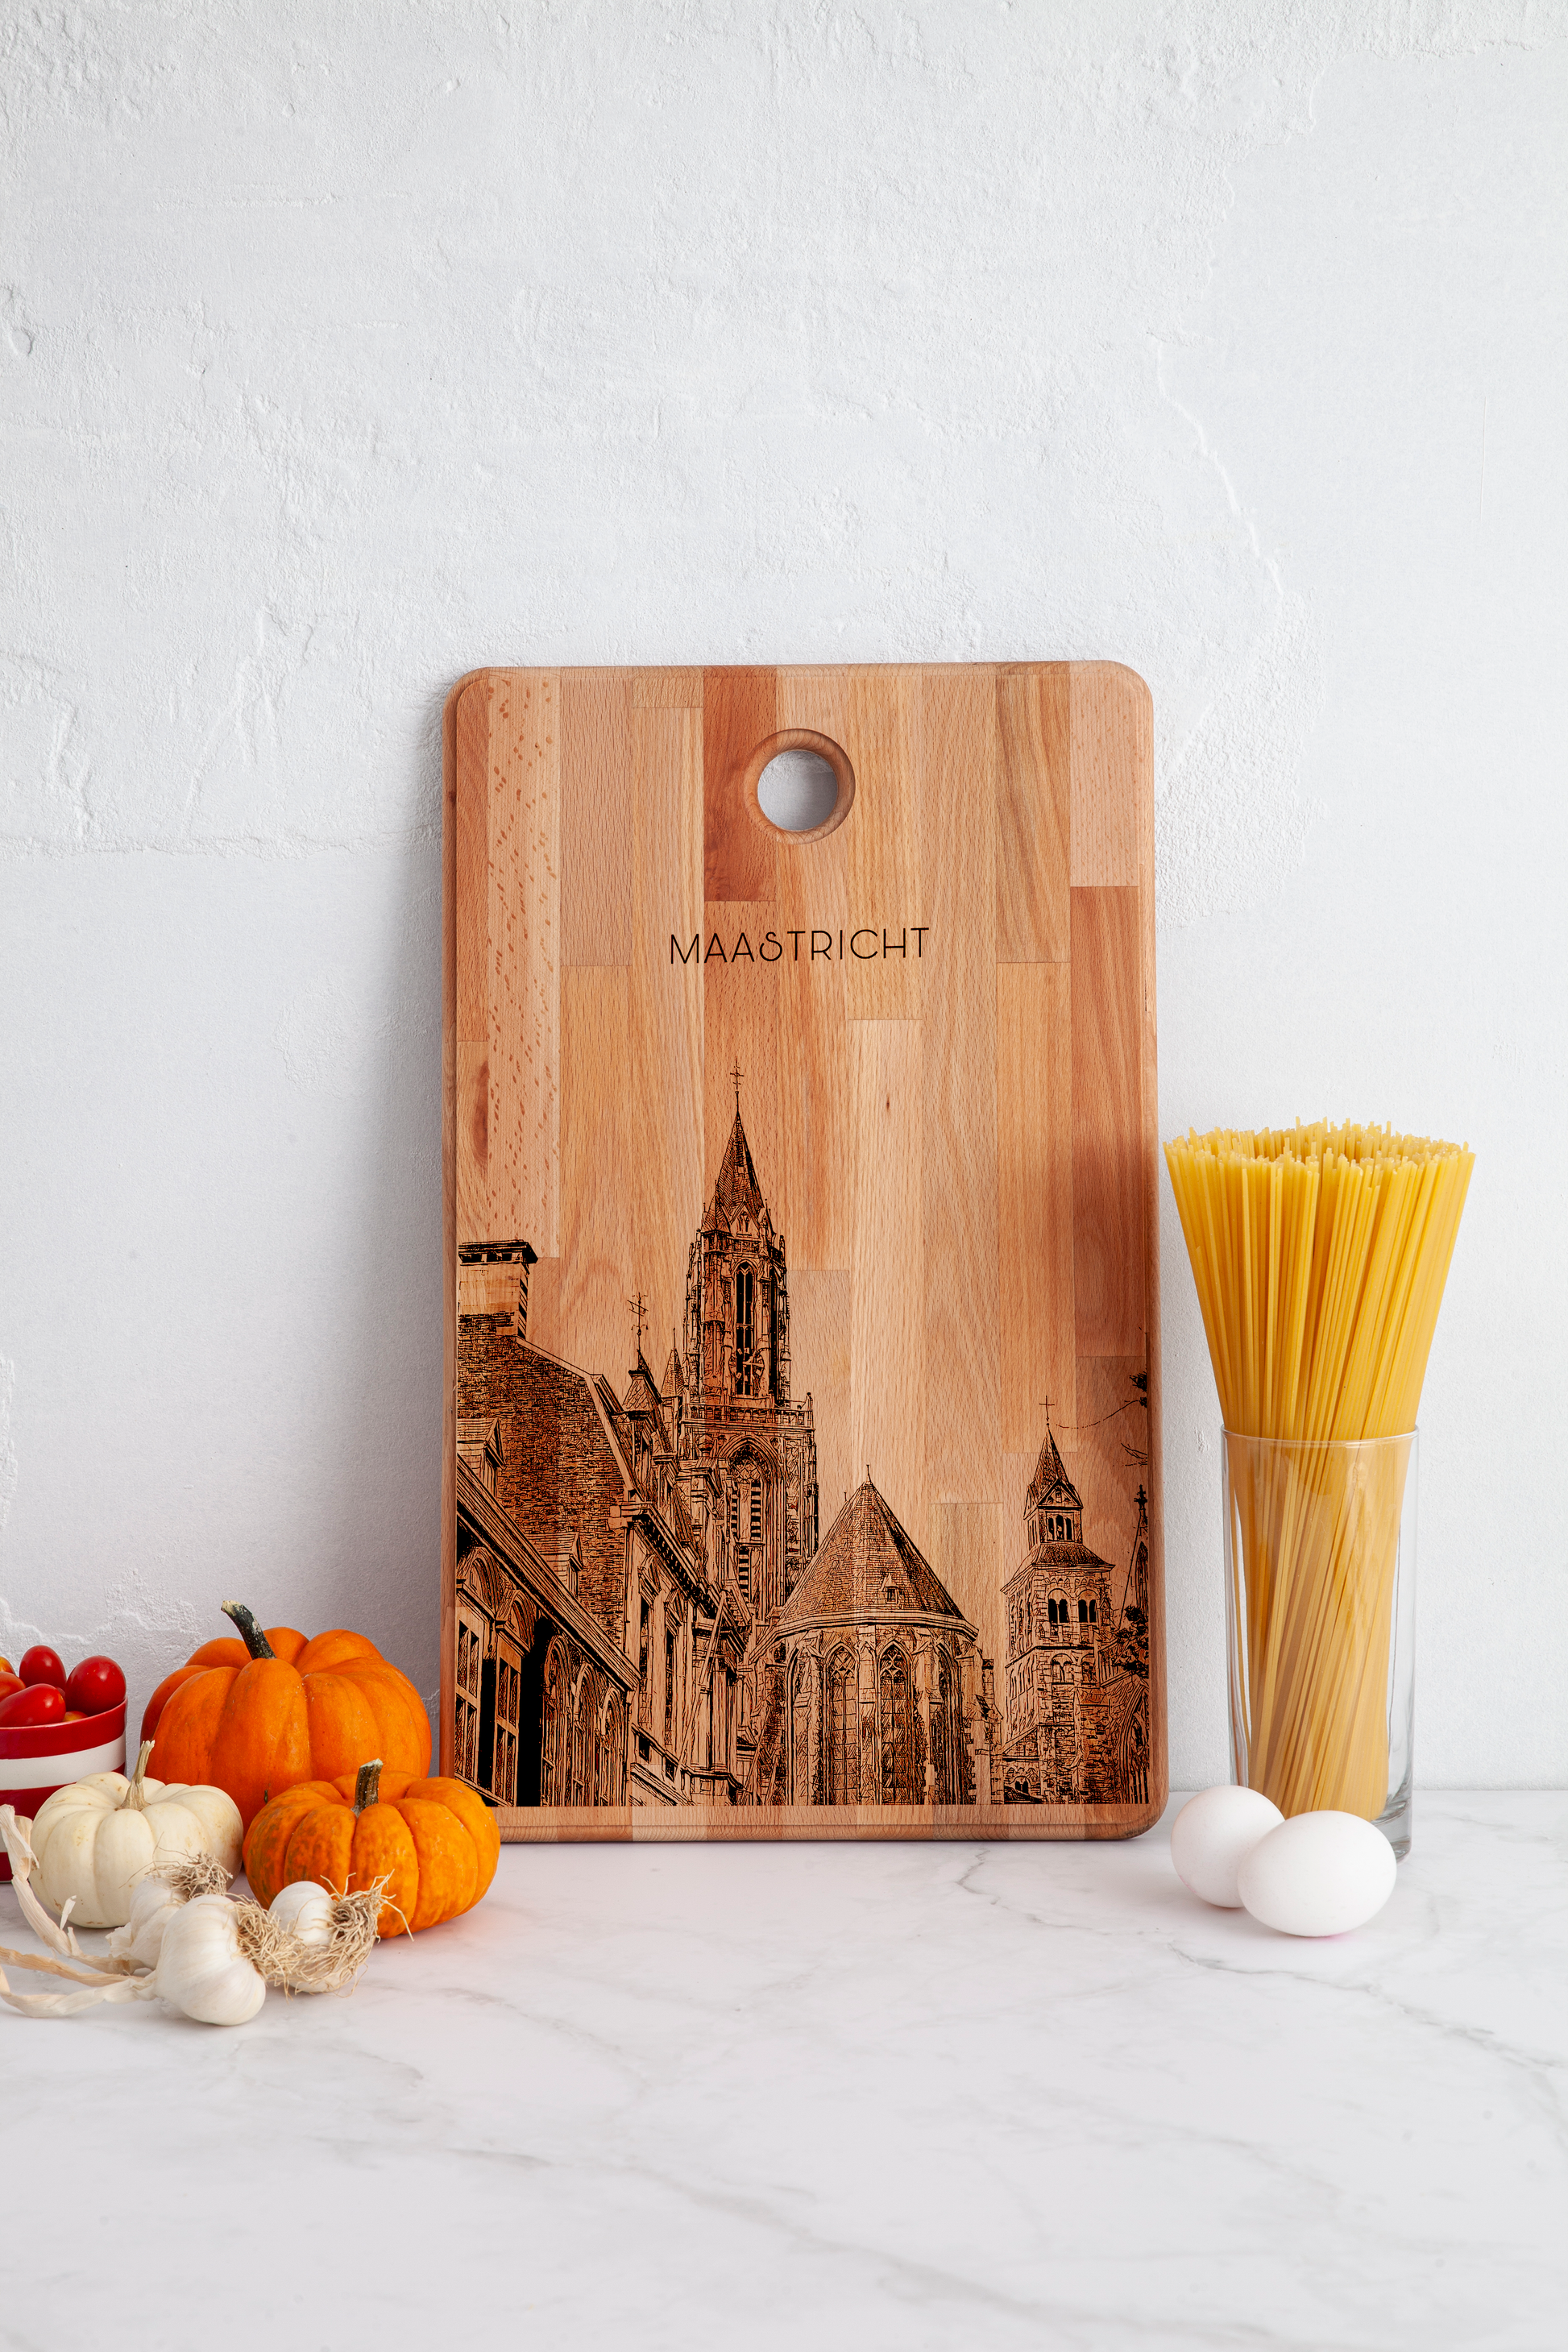 Maastricht, Sint-Janskerk, cutting board, in kitchen